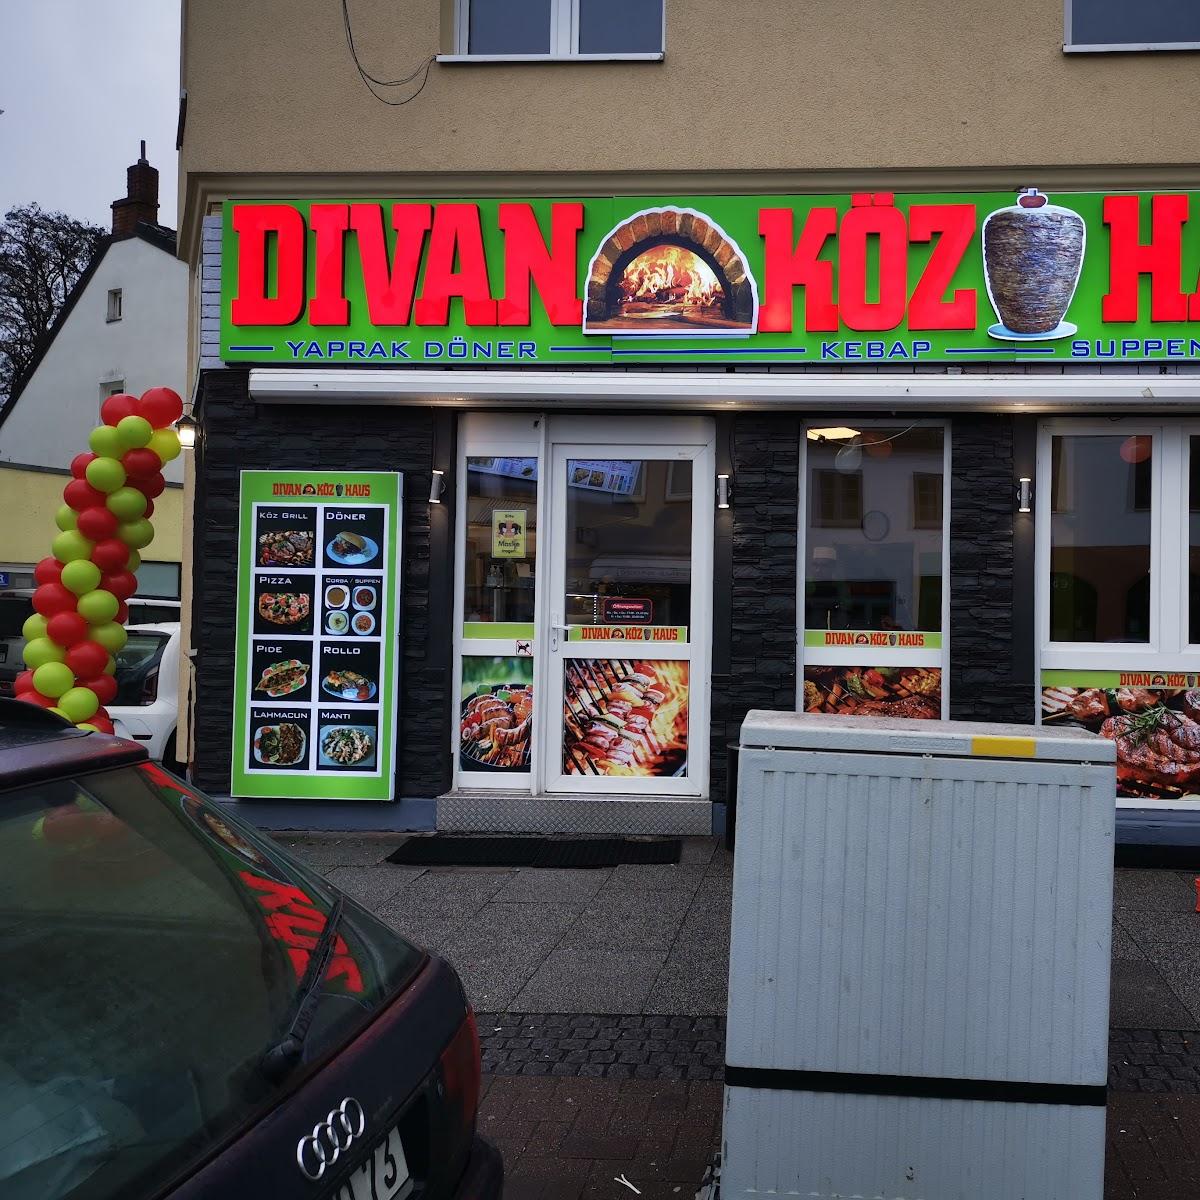 Restaurant "Divan Köz Haus" in Bremen